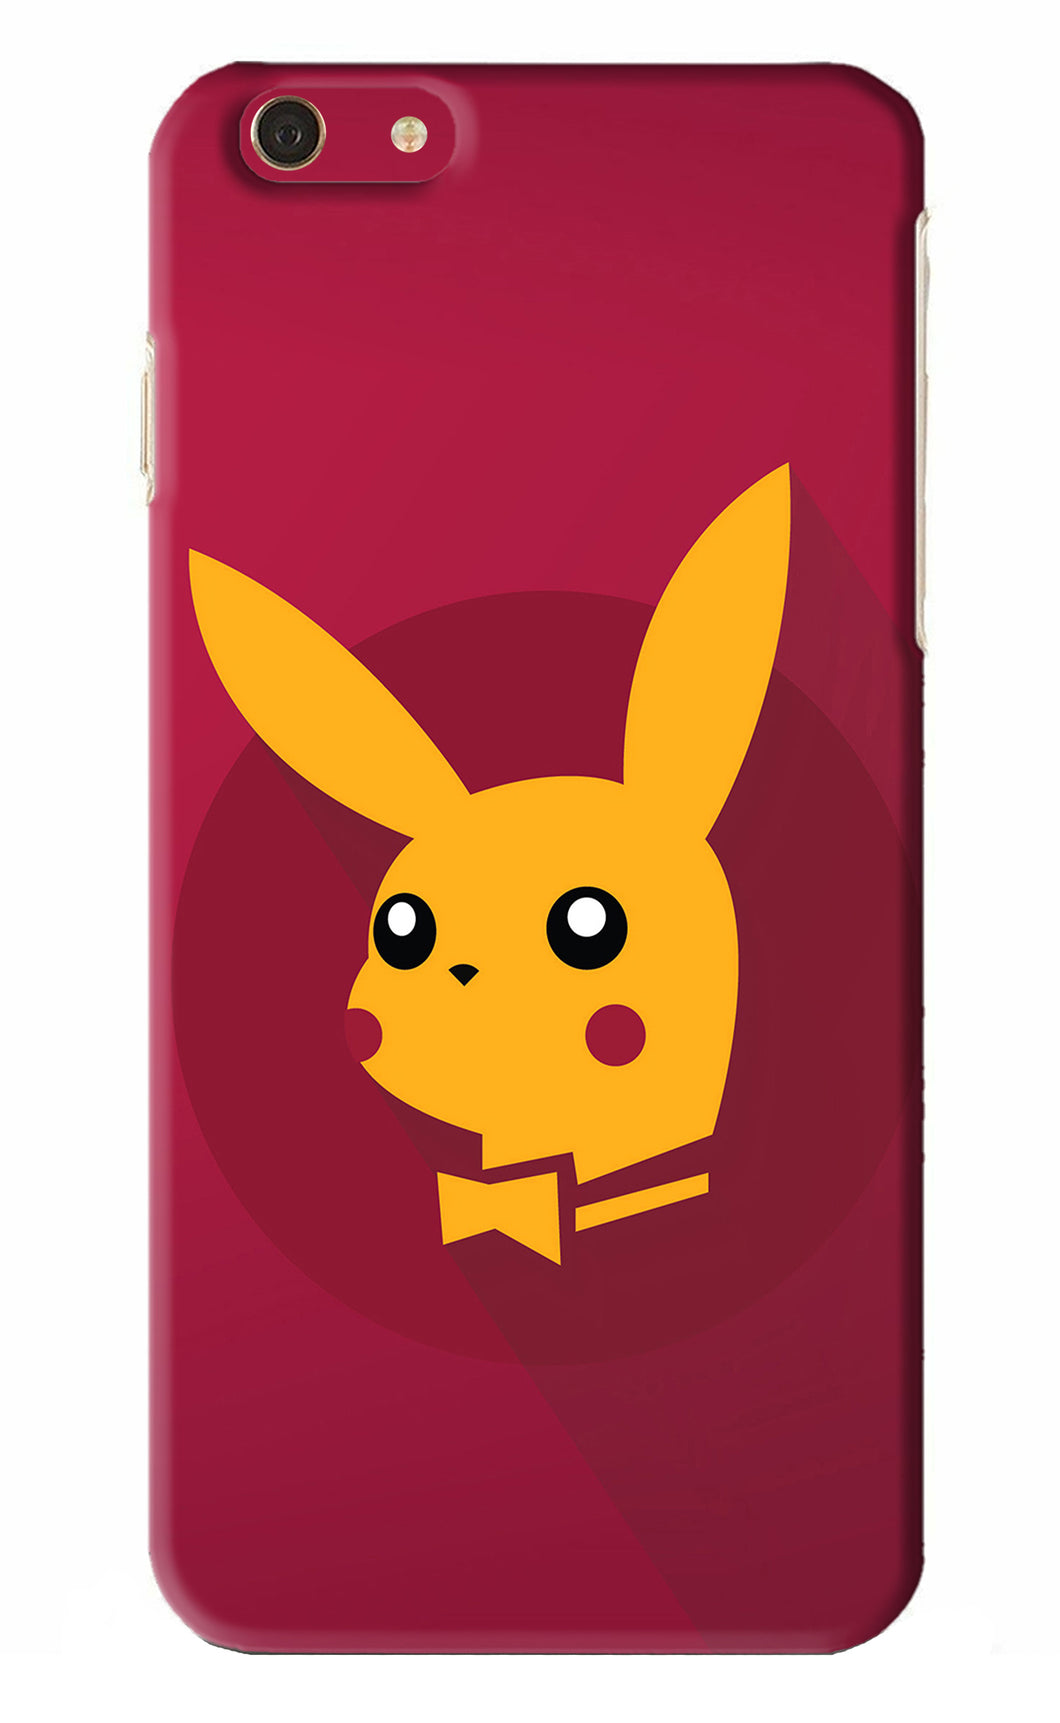 Pikachu iPhone 6S Plus Back Skin Wrap